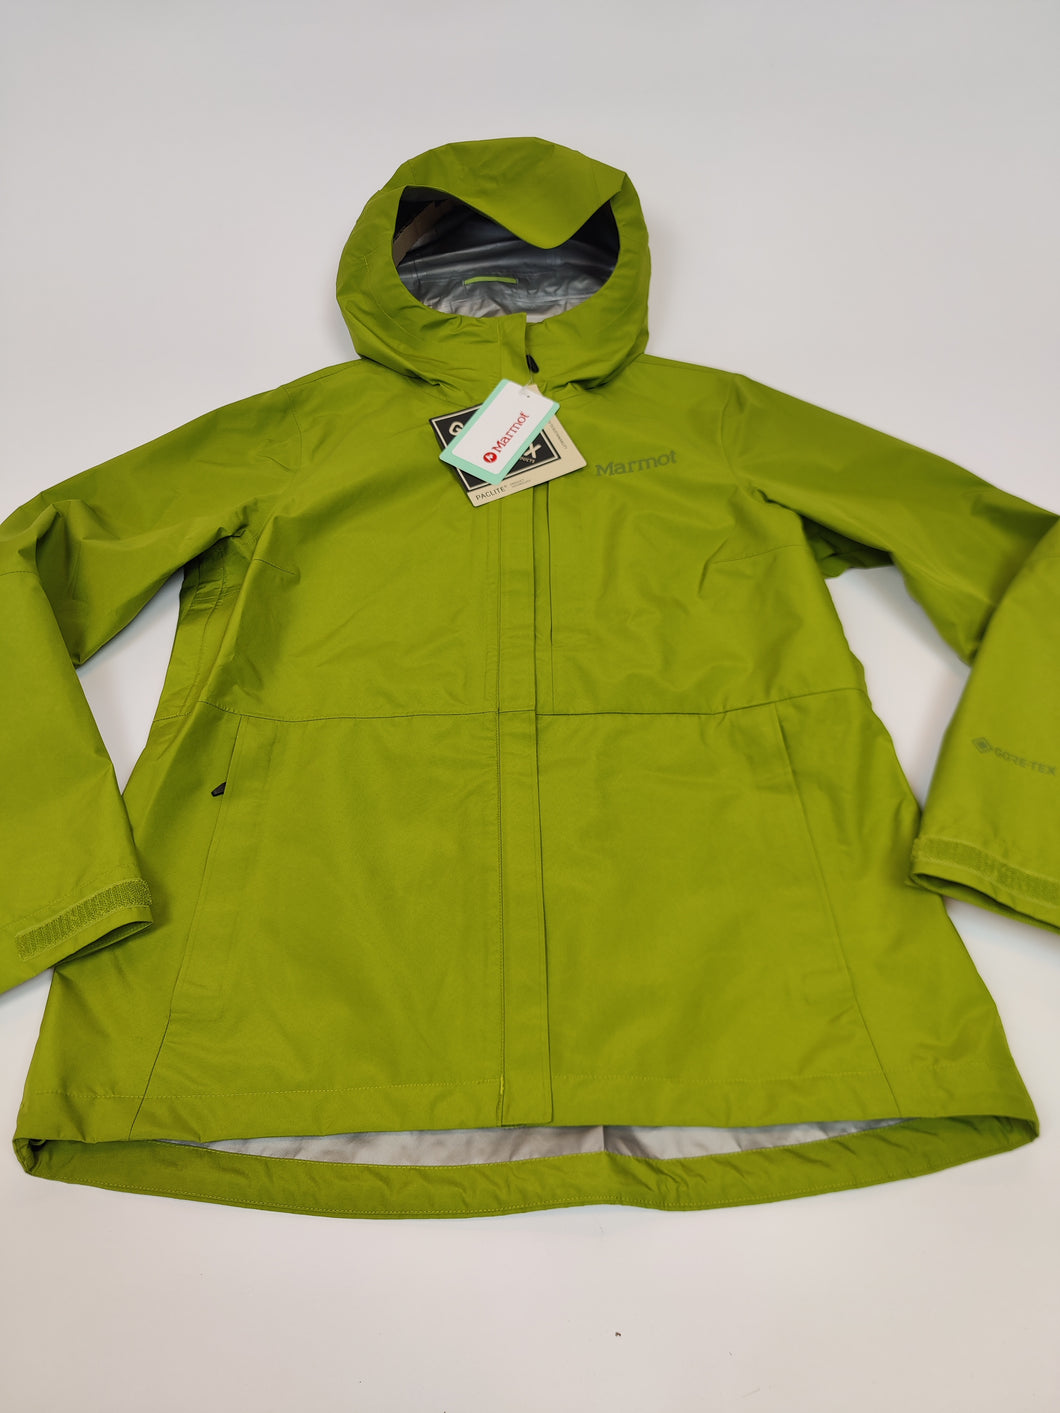 Marmot Minimalist GORE-TEX Jacket cilantro Wm's Size M